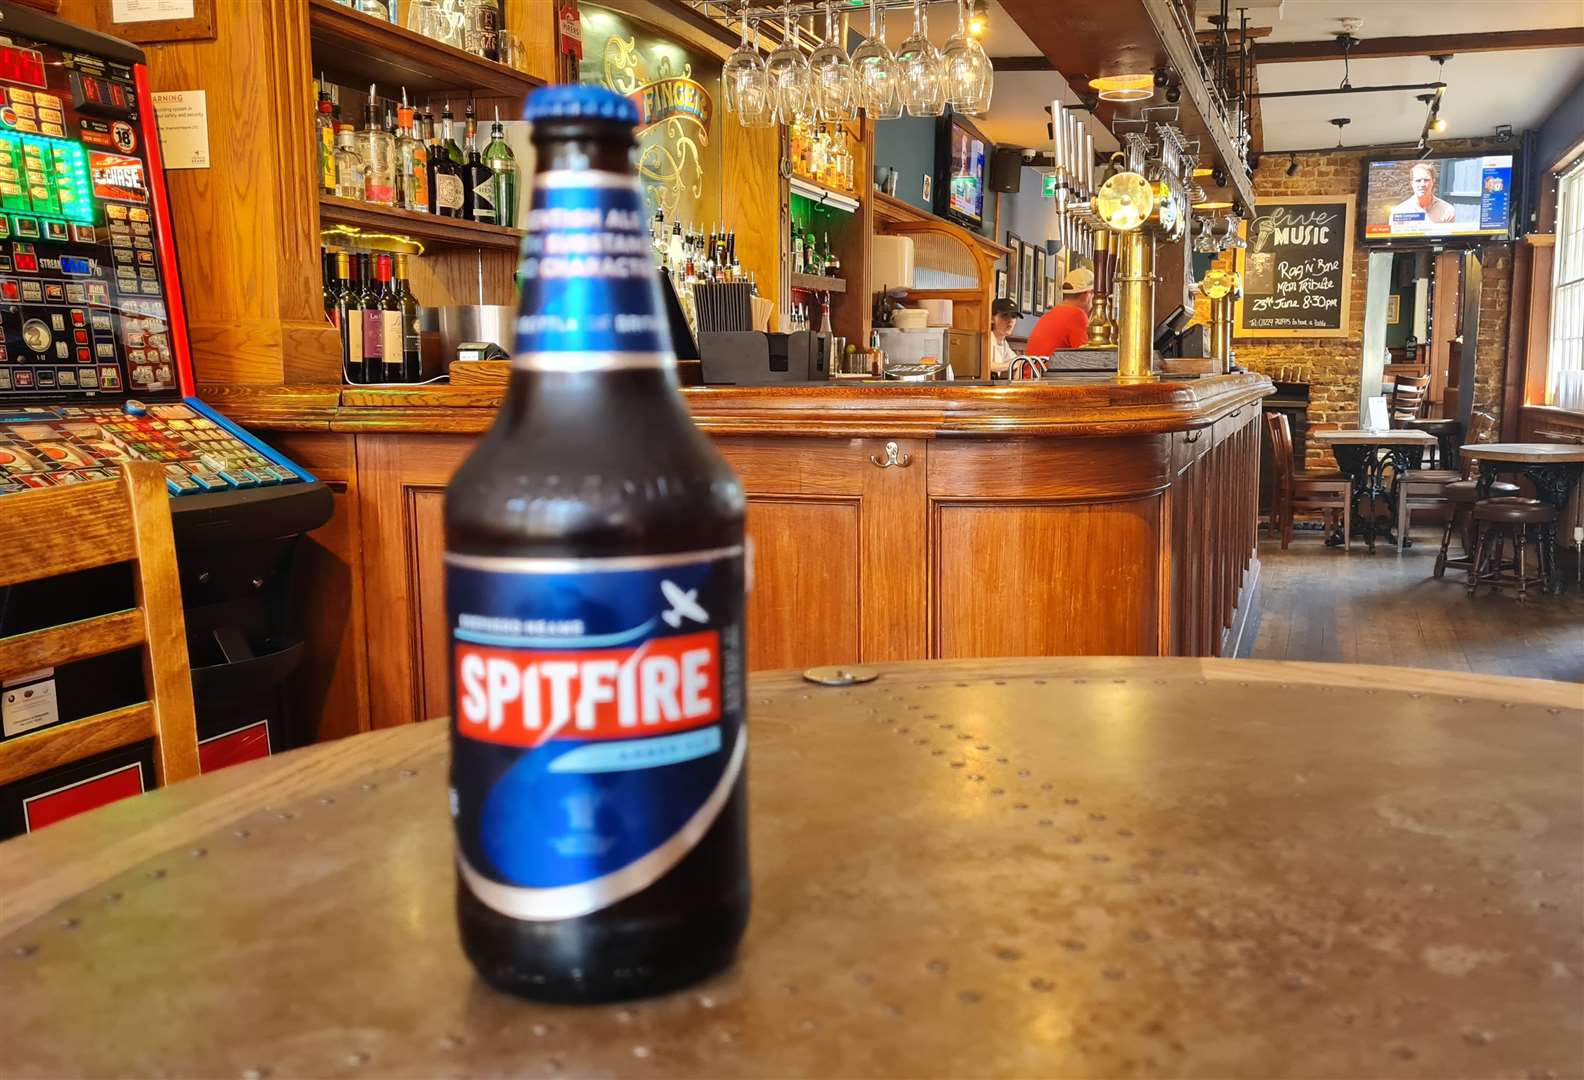 The weaker Spitfire beer